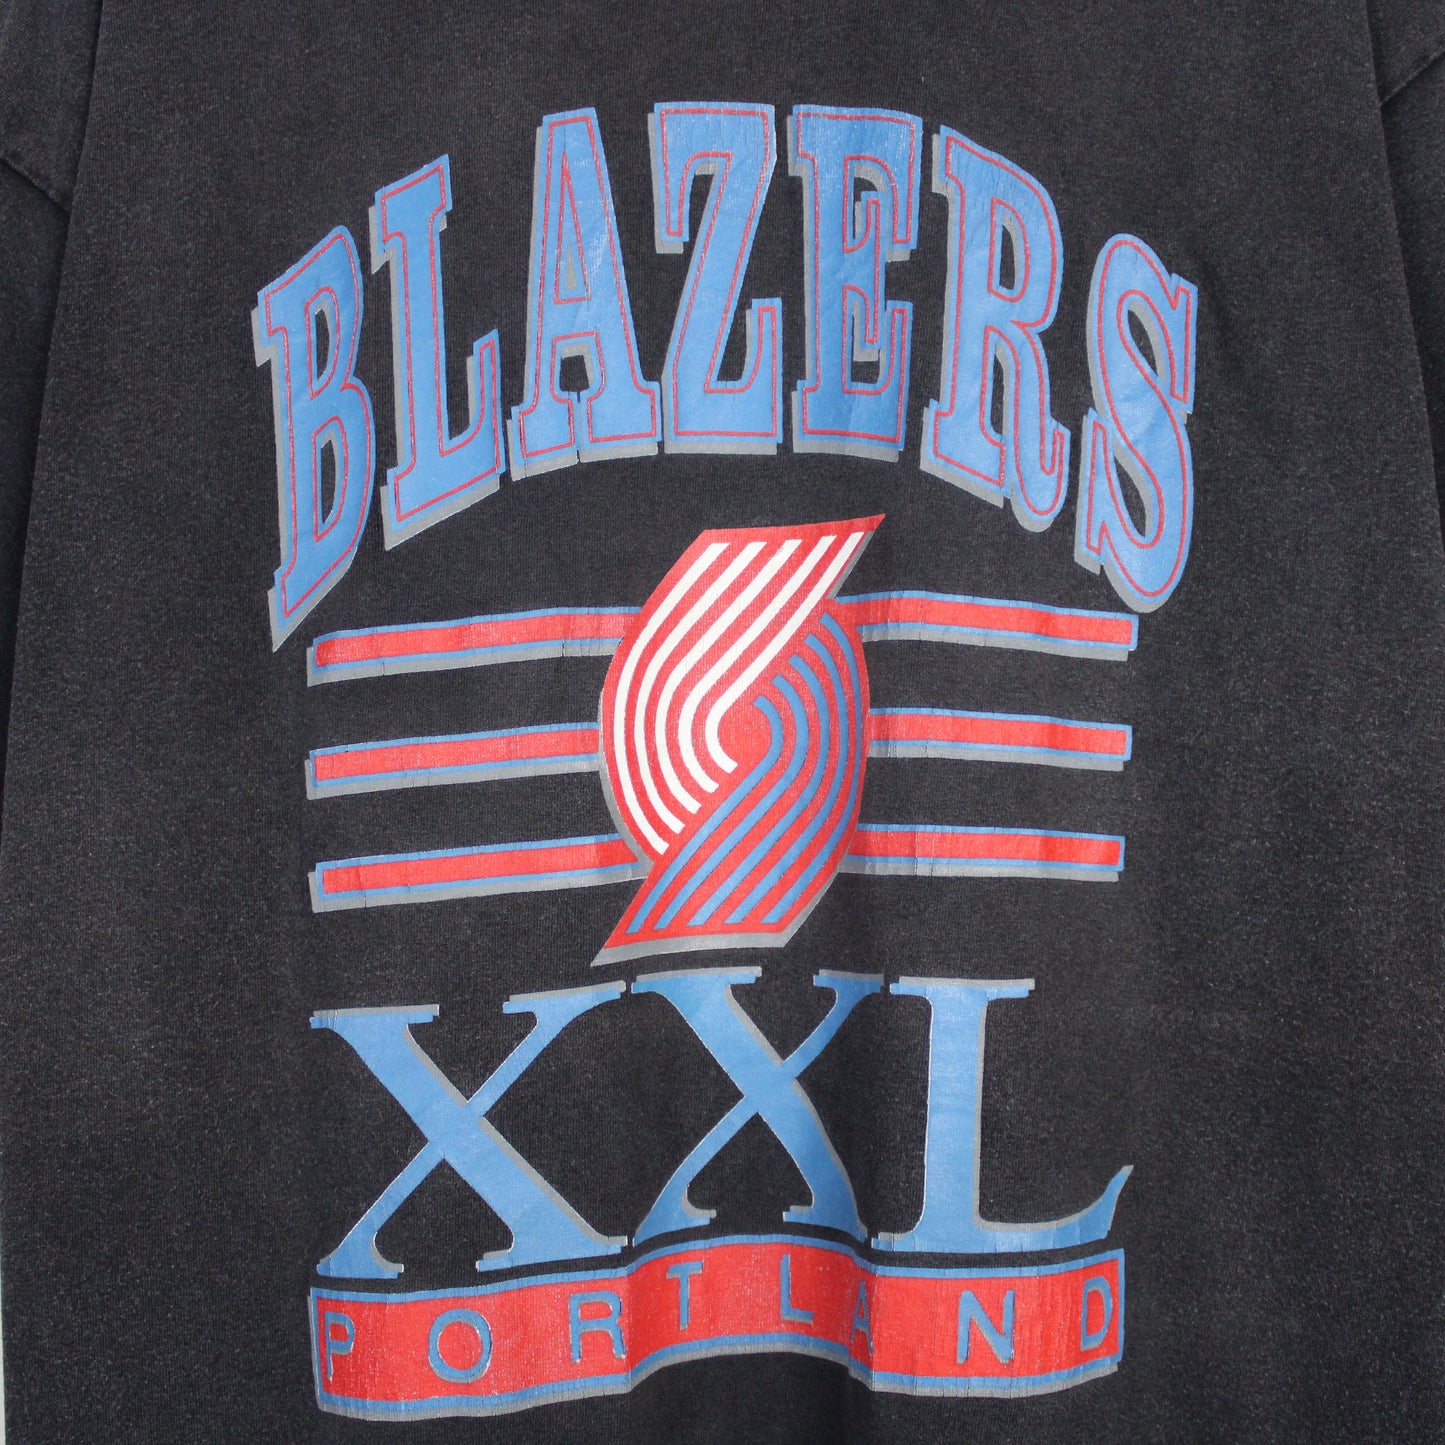 Vintage 1992 Portland Trail Blazers NBA Tee - XL